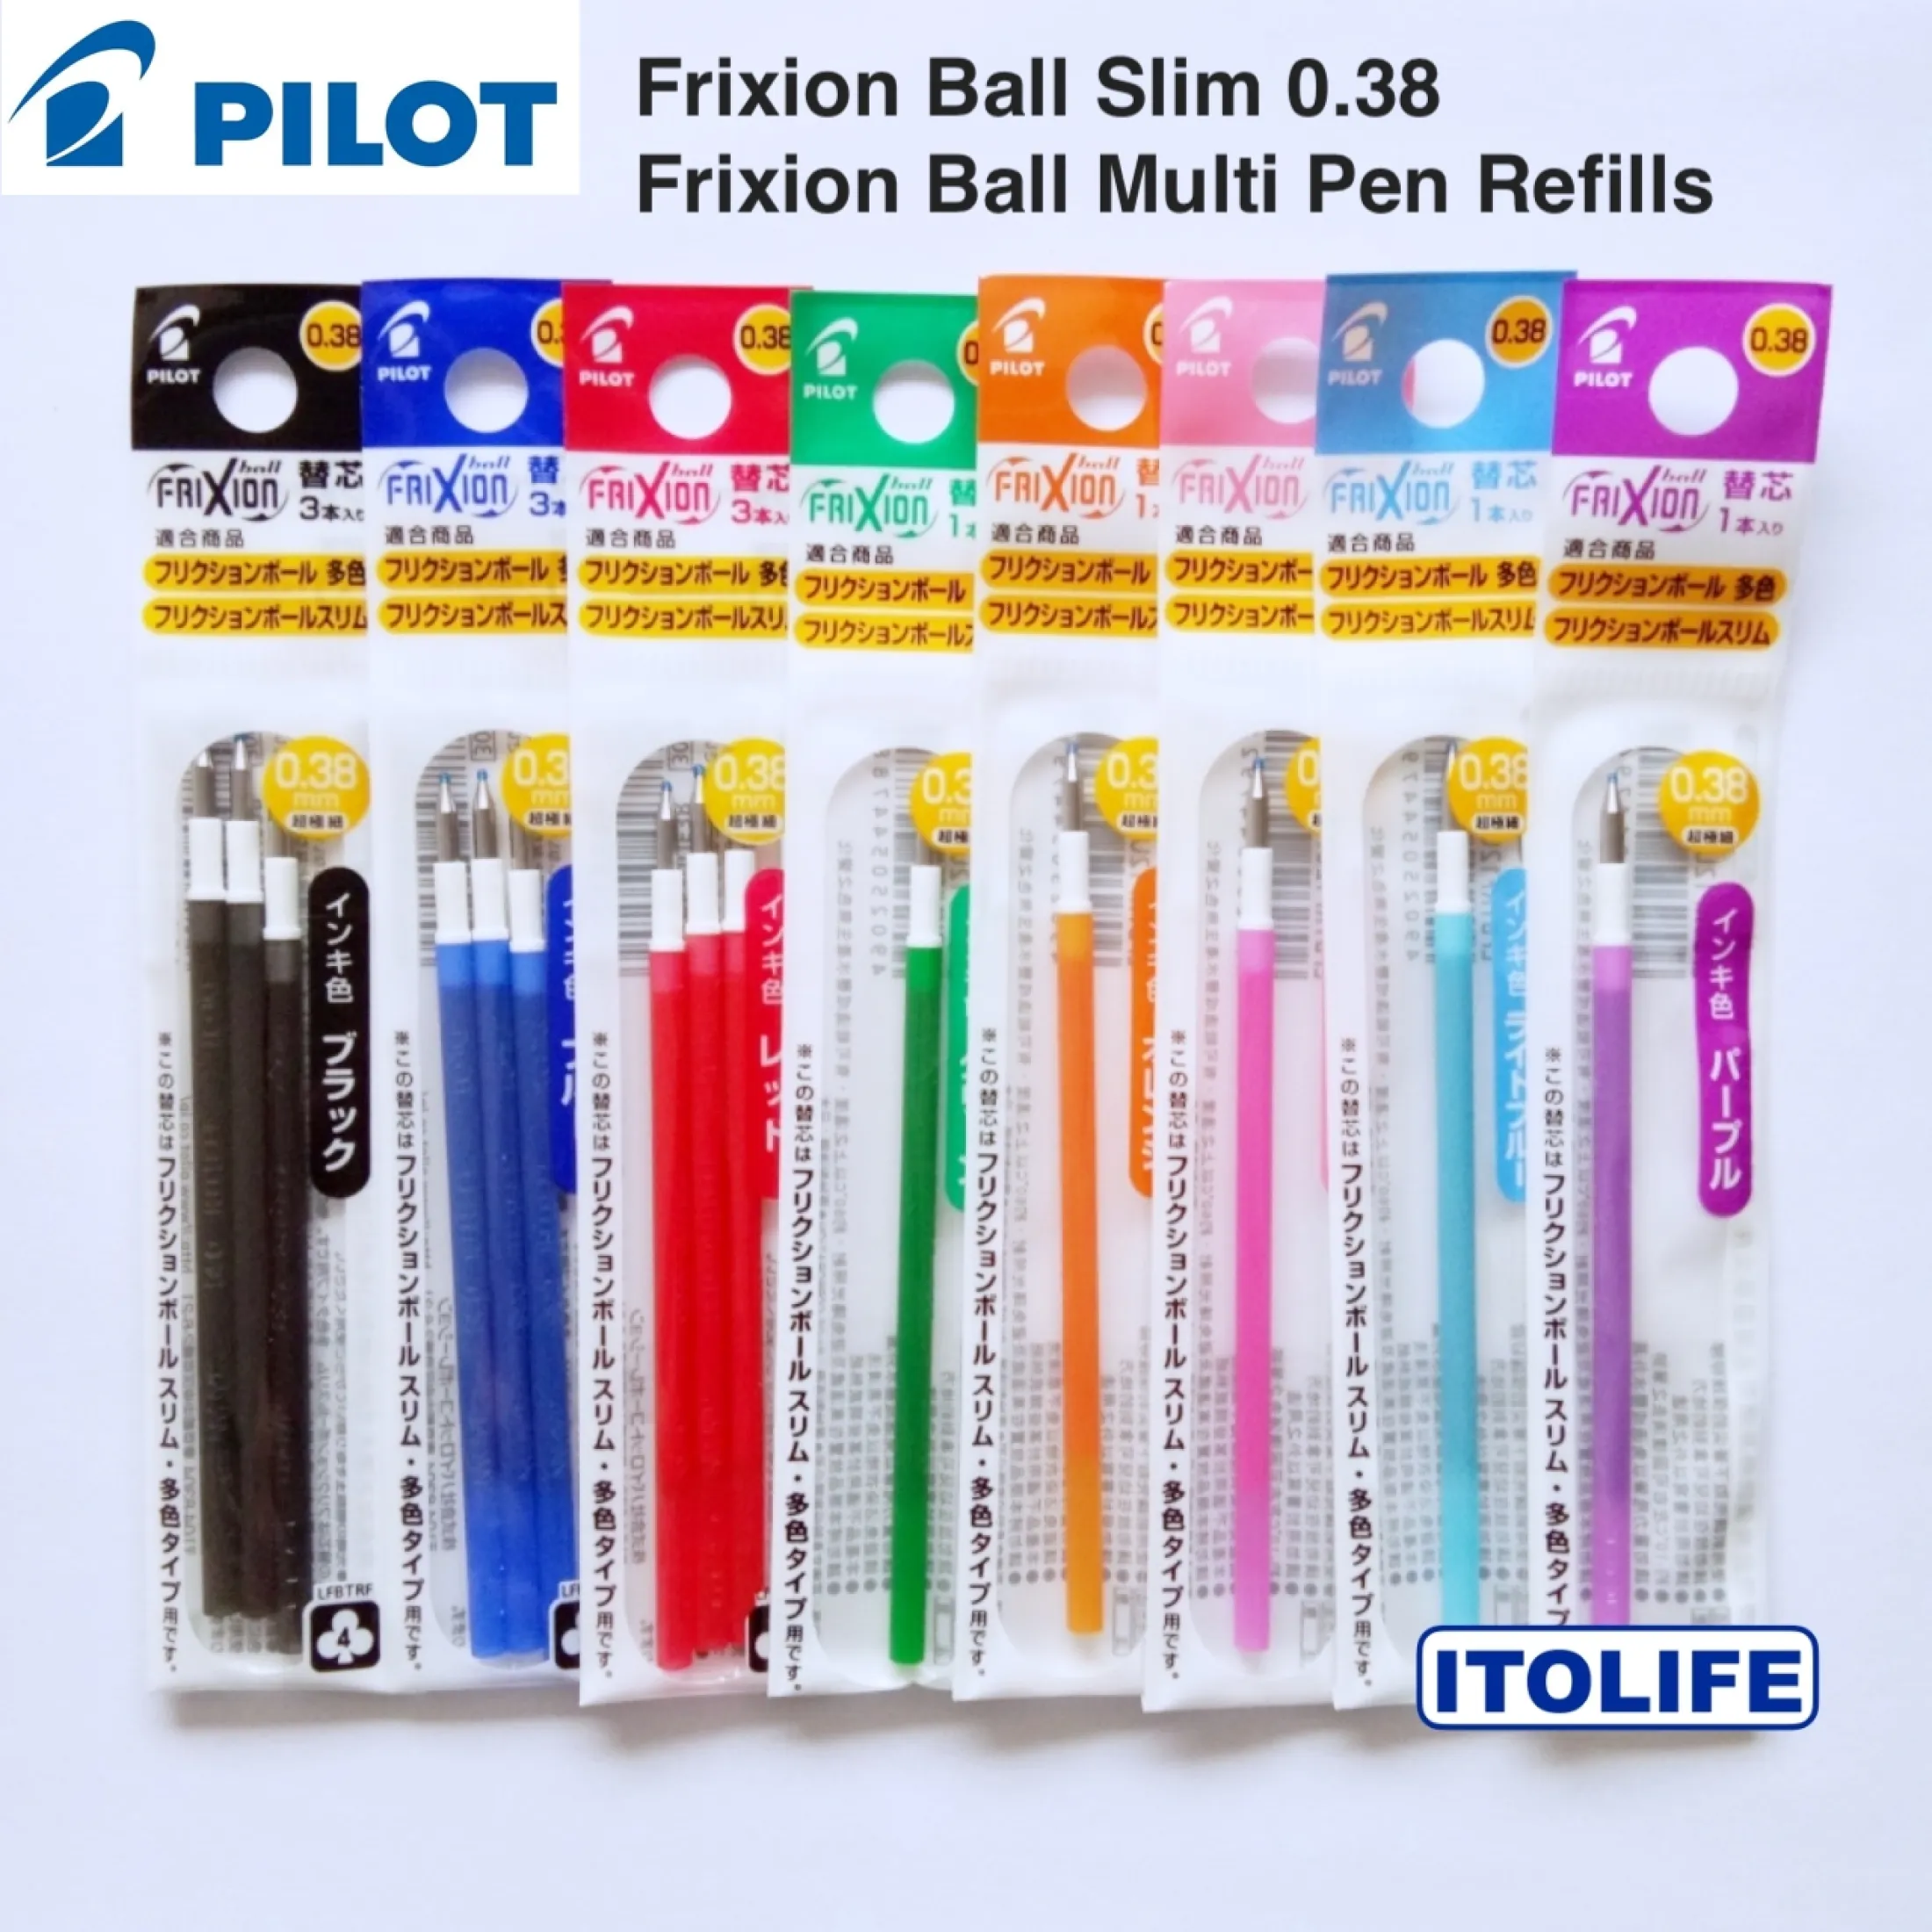 Pilot Frixion Ball Slim 0 38 Ink Refills 1 Pack Lazada Ph